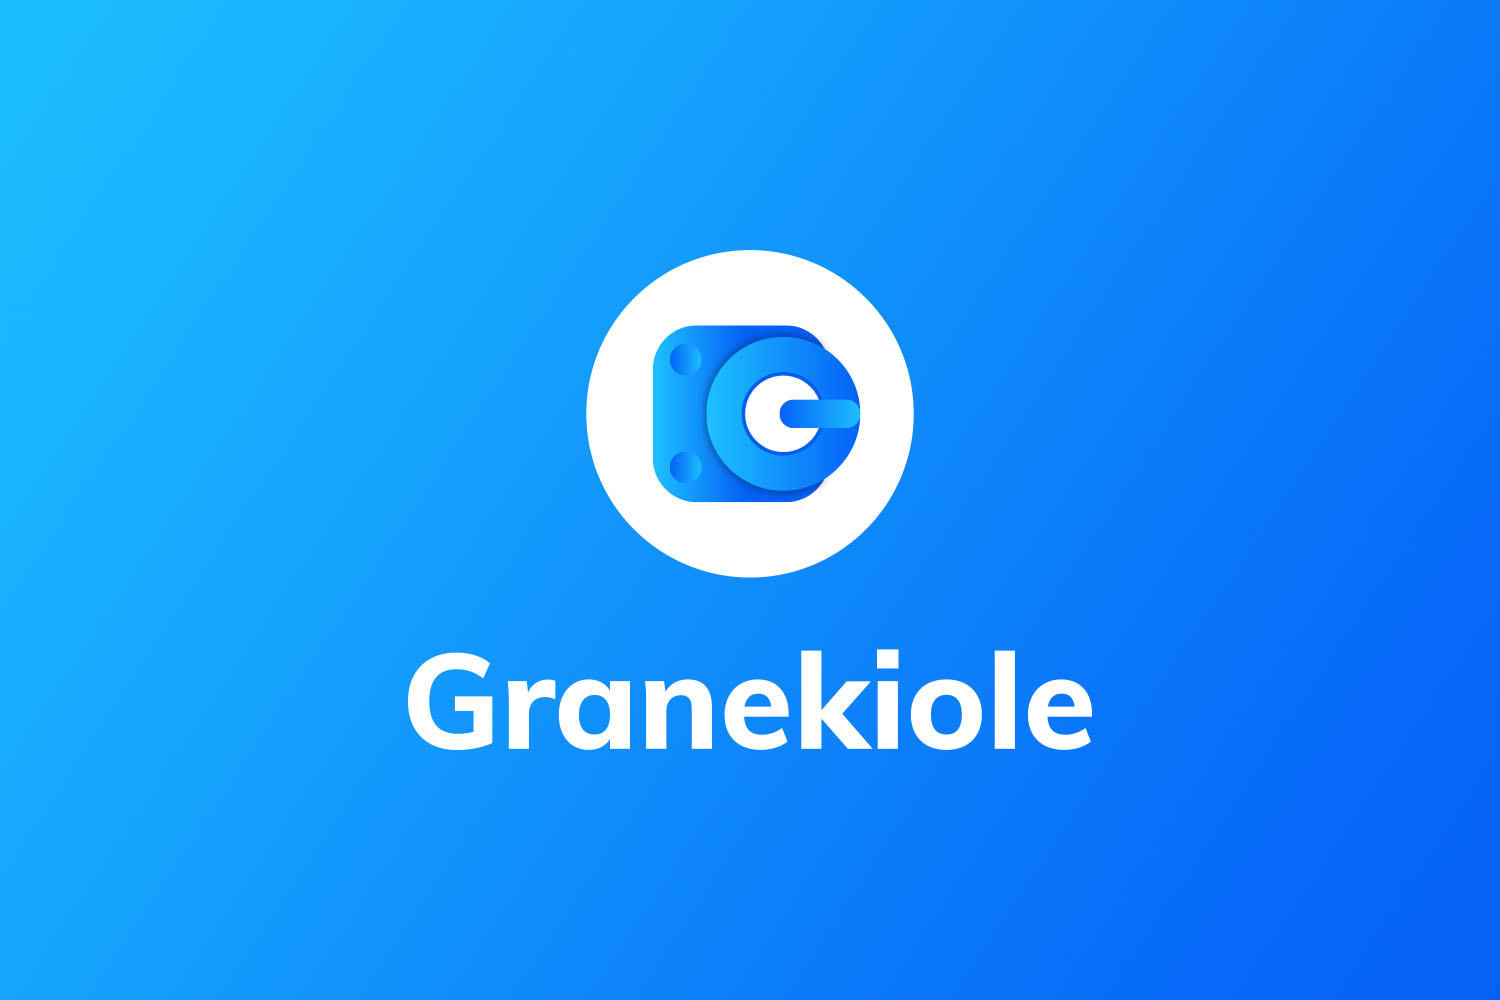 Granekiole_Thumbnail2.jpg